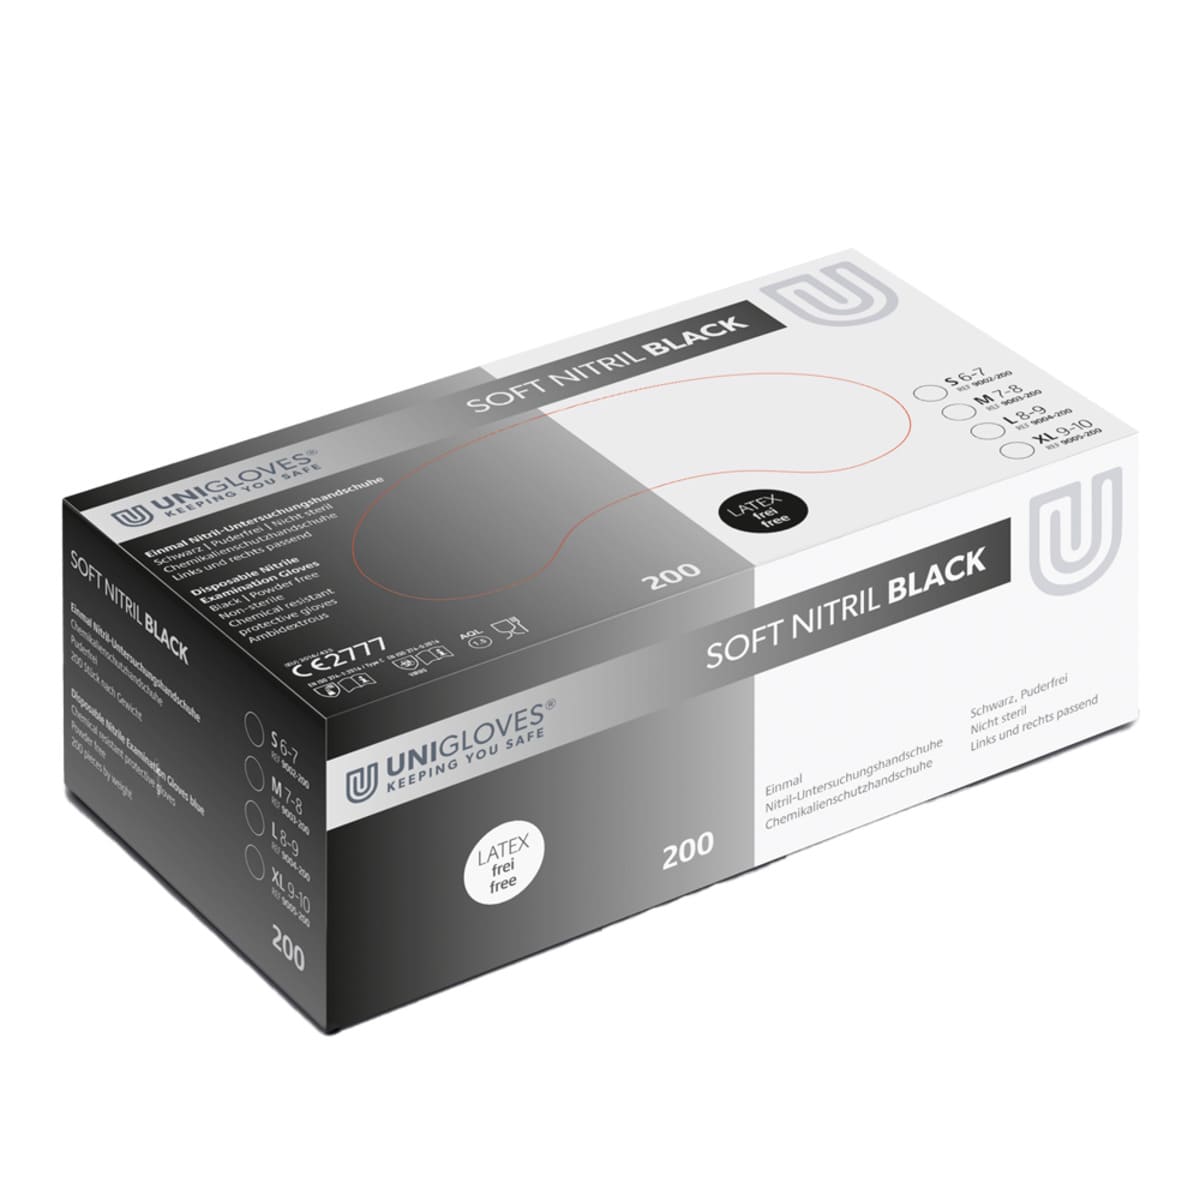 Unigloves Soft Nitril Black 200